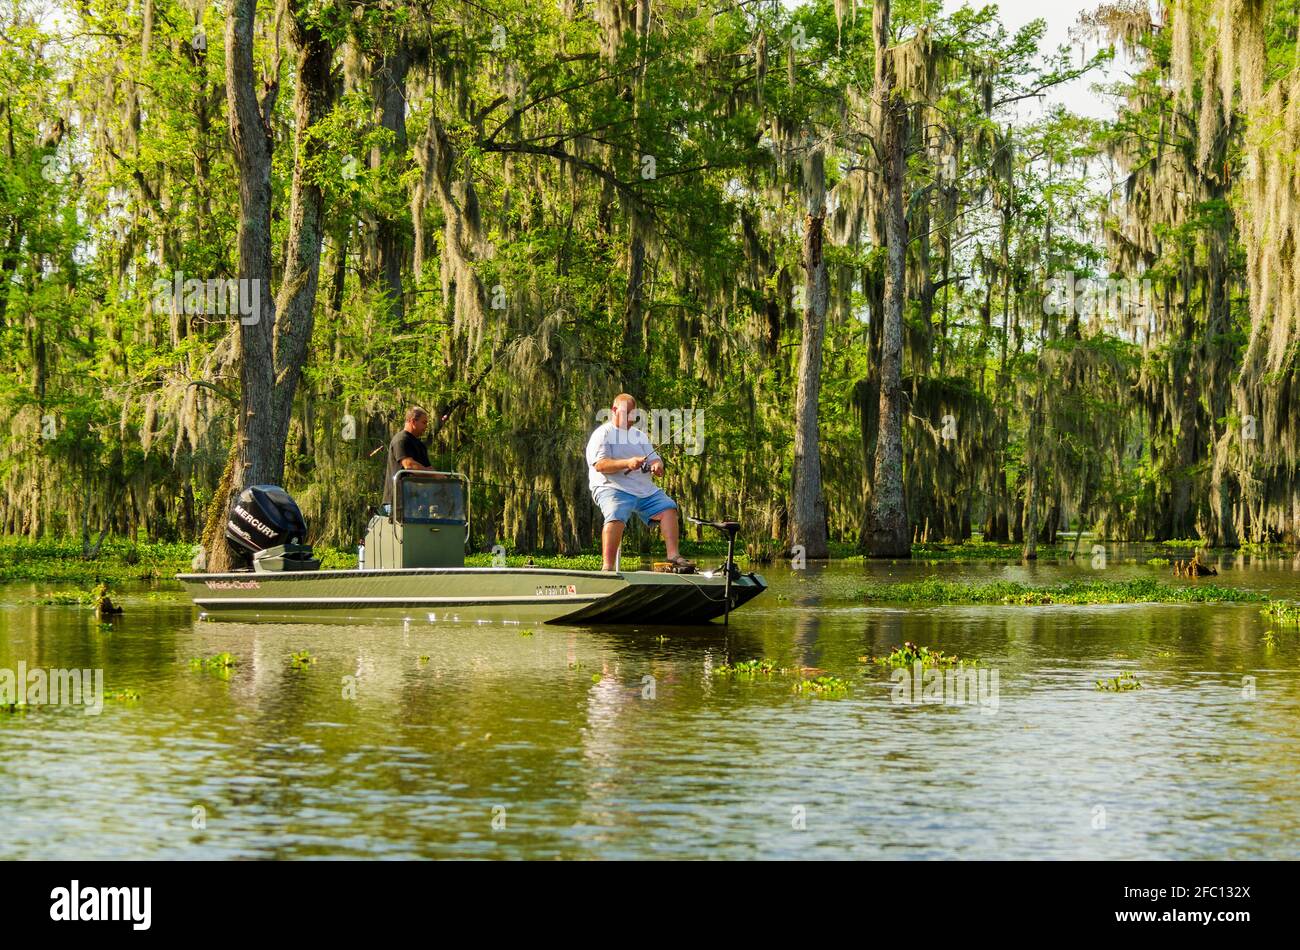 Two Caucasian men fishing in a bass boat in the Atchafalaya basin swamp in Louisiana, USA. Stock Photo